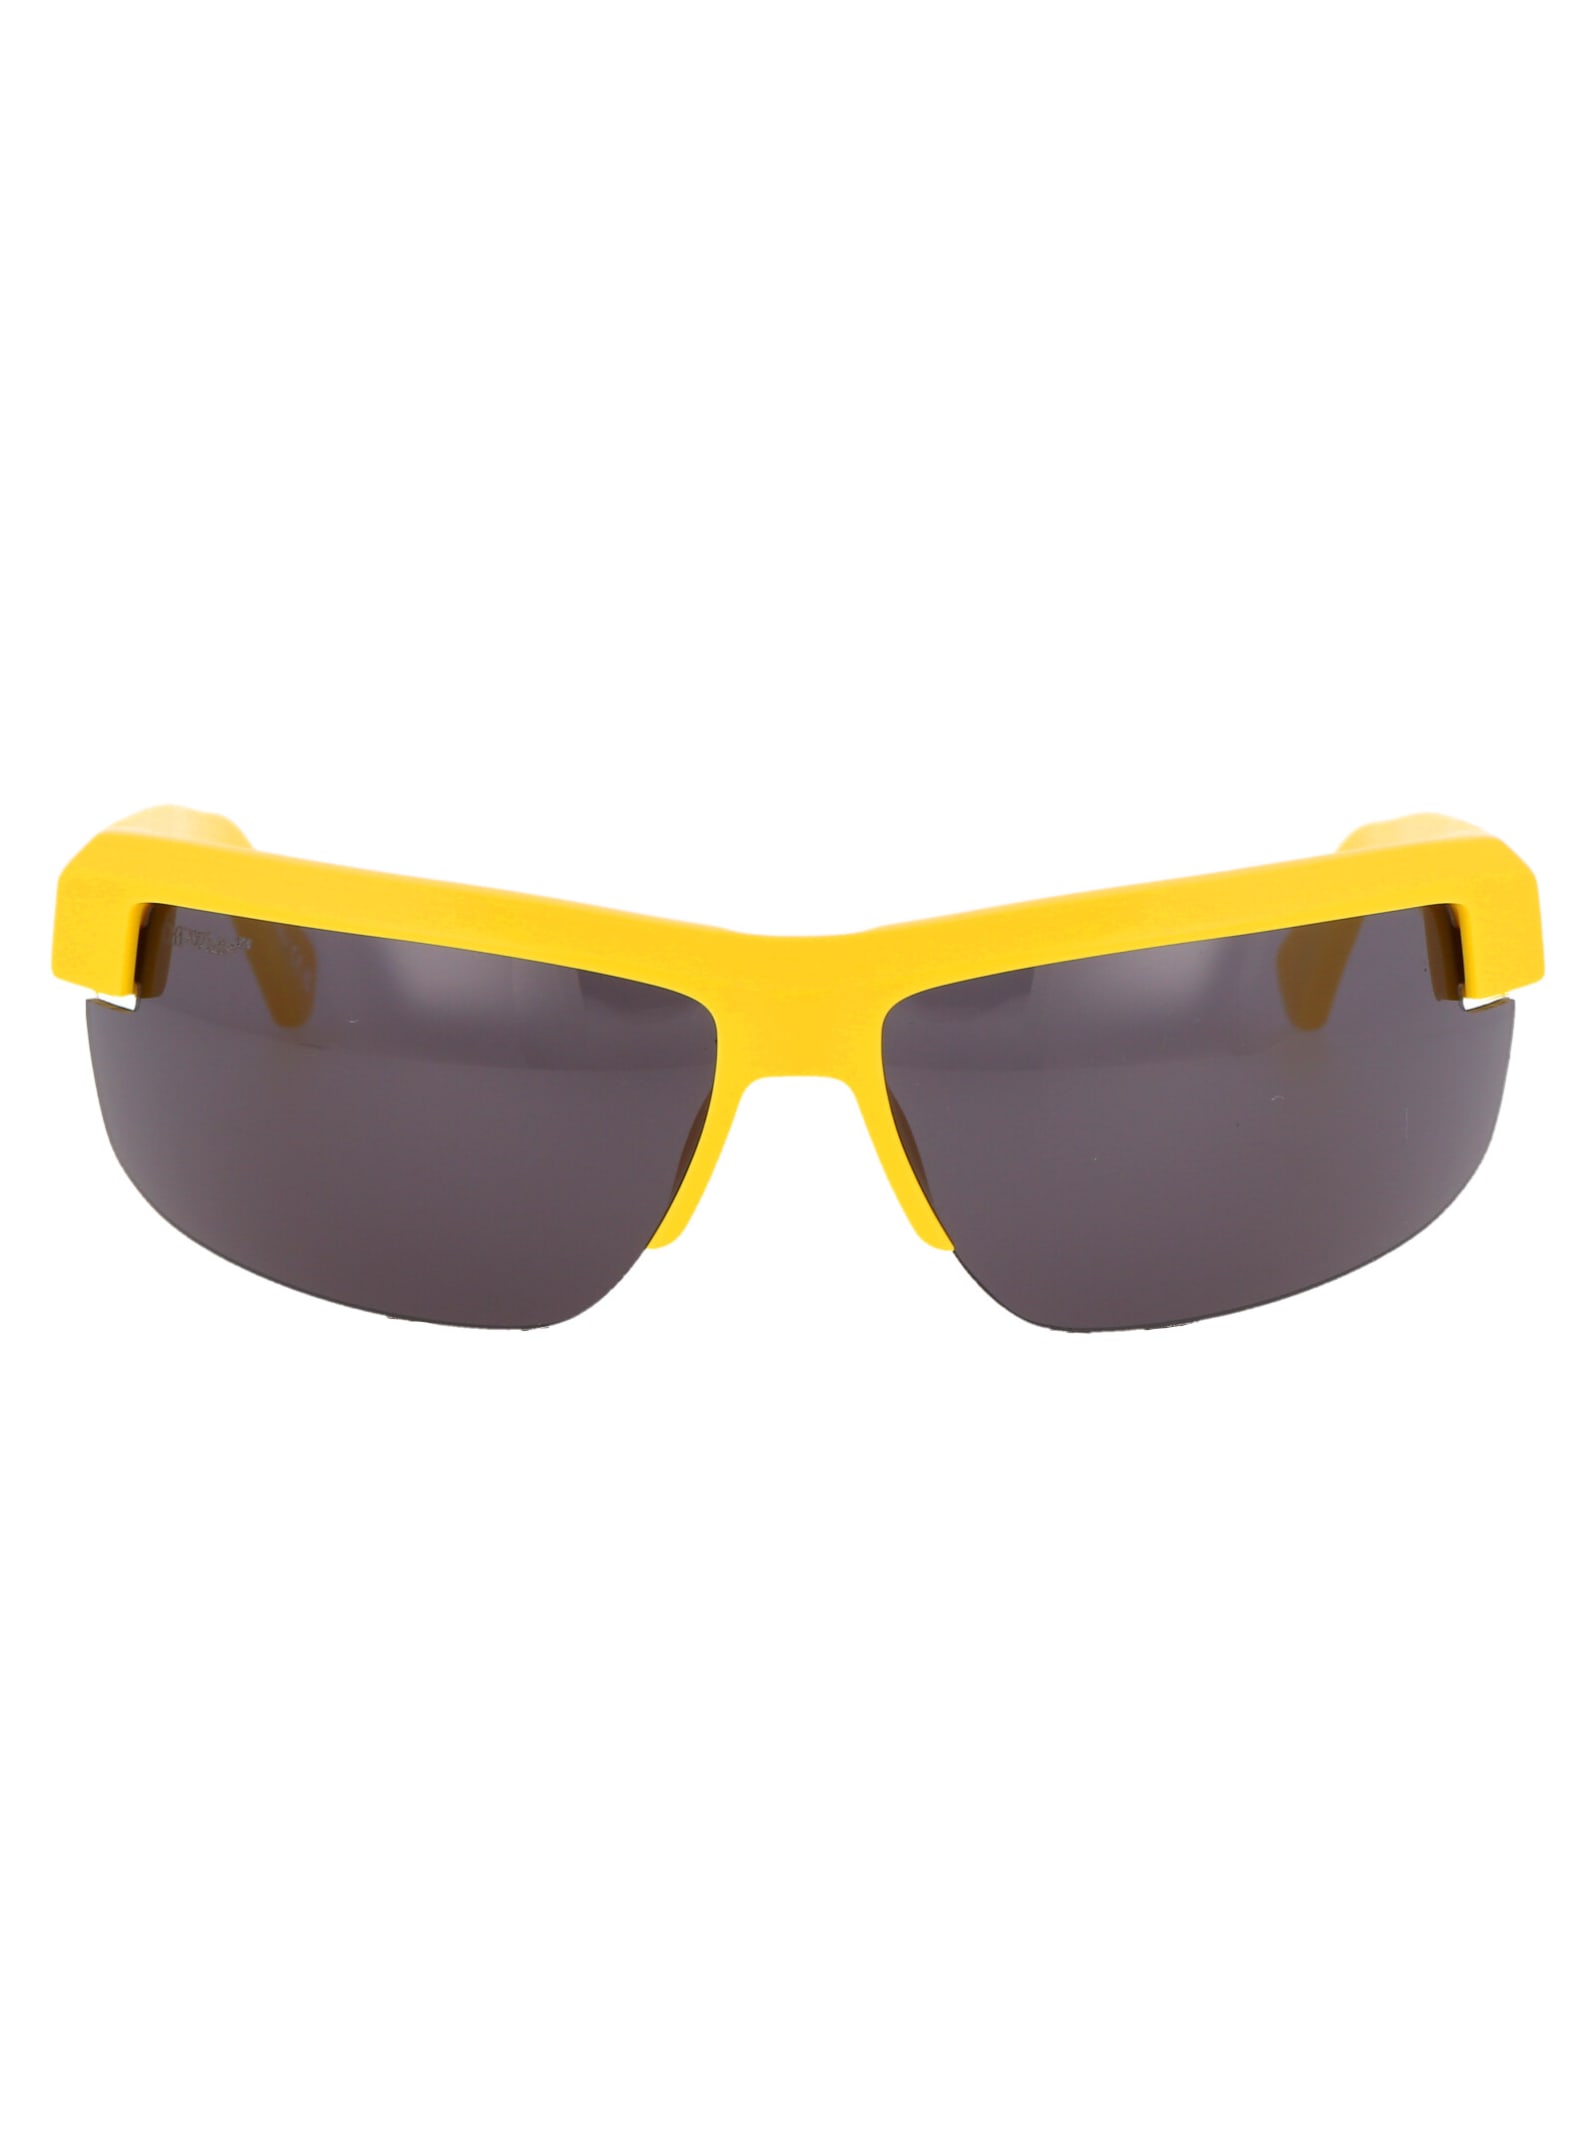 Off-White Black/Yellow Sunglasses